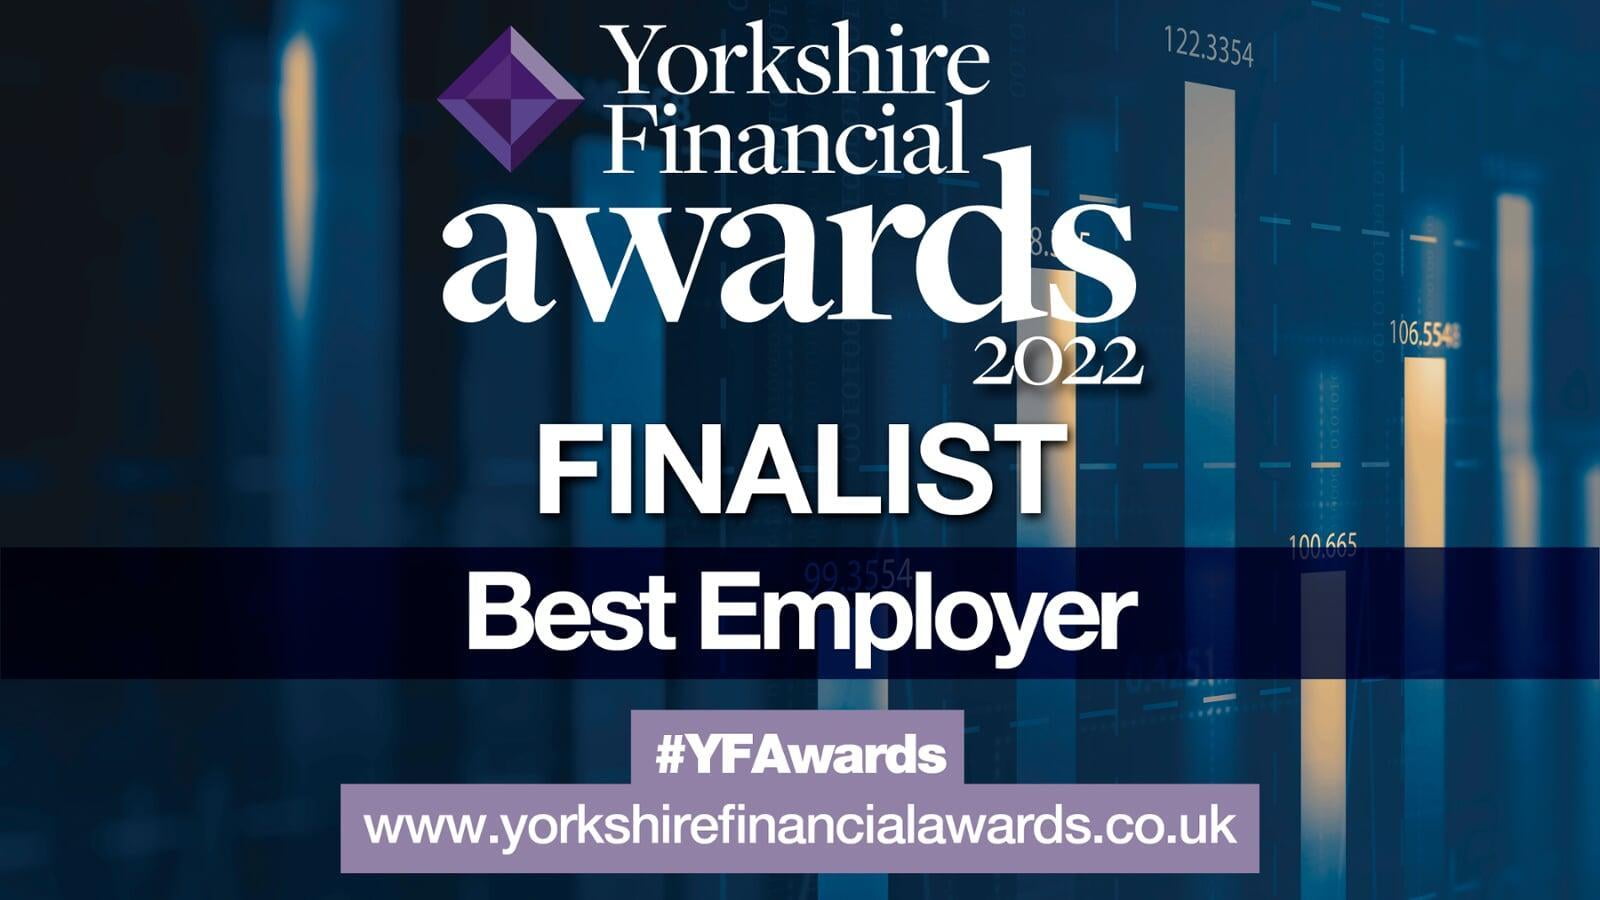 yorkshire financial awards 2020 finalist best employer logo